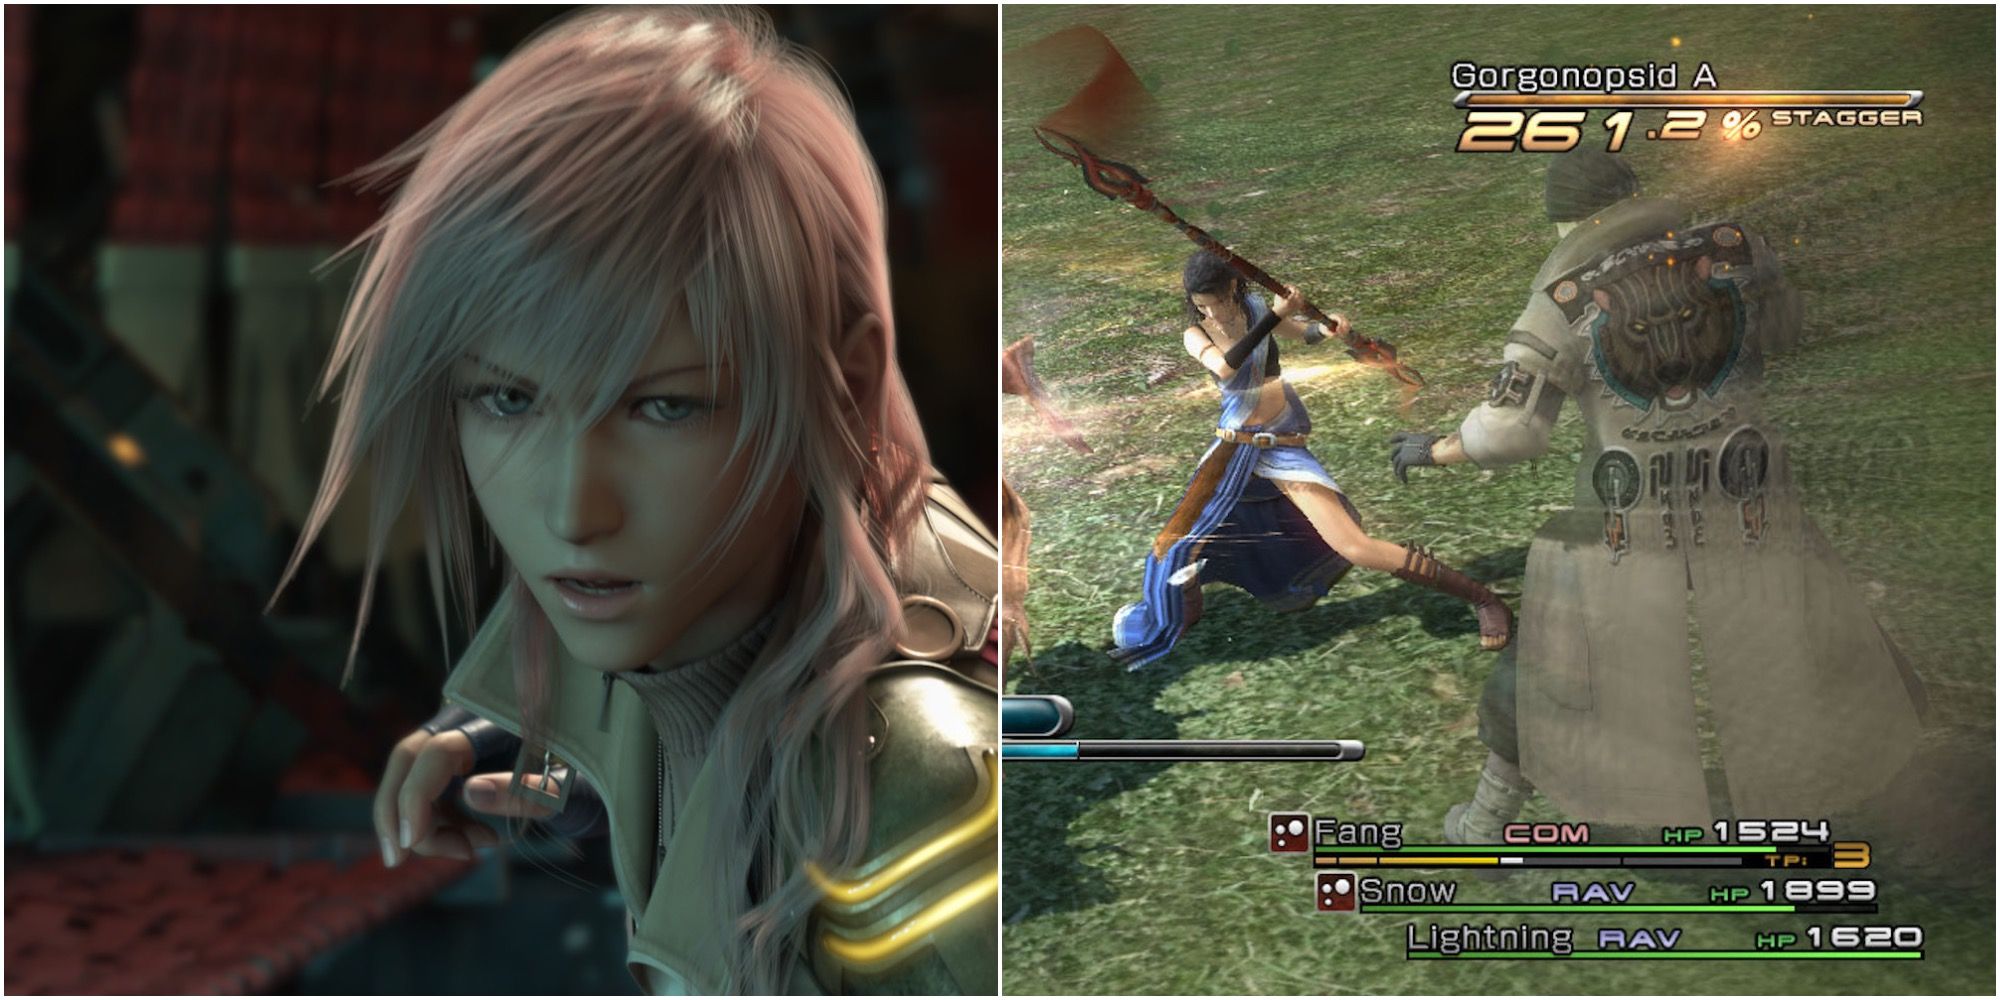 Final Fantasy 13 lightning, snow, and fang split image